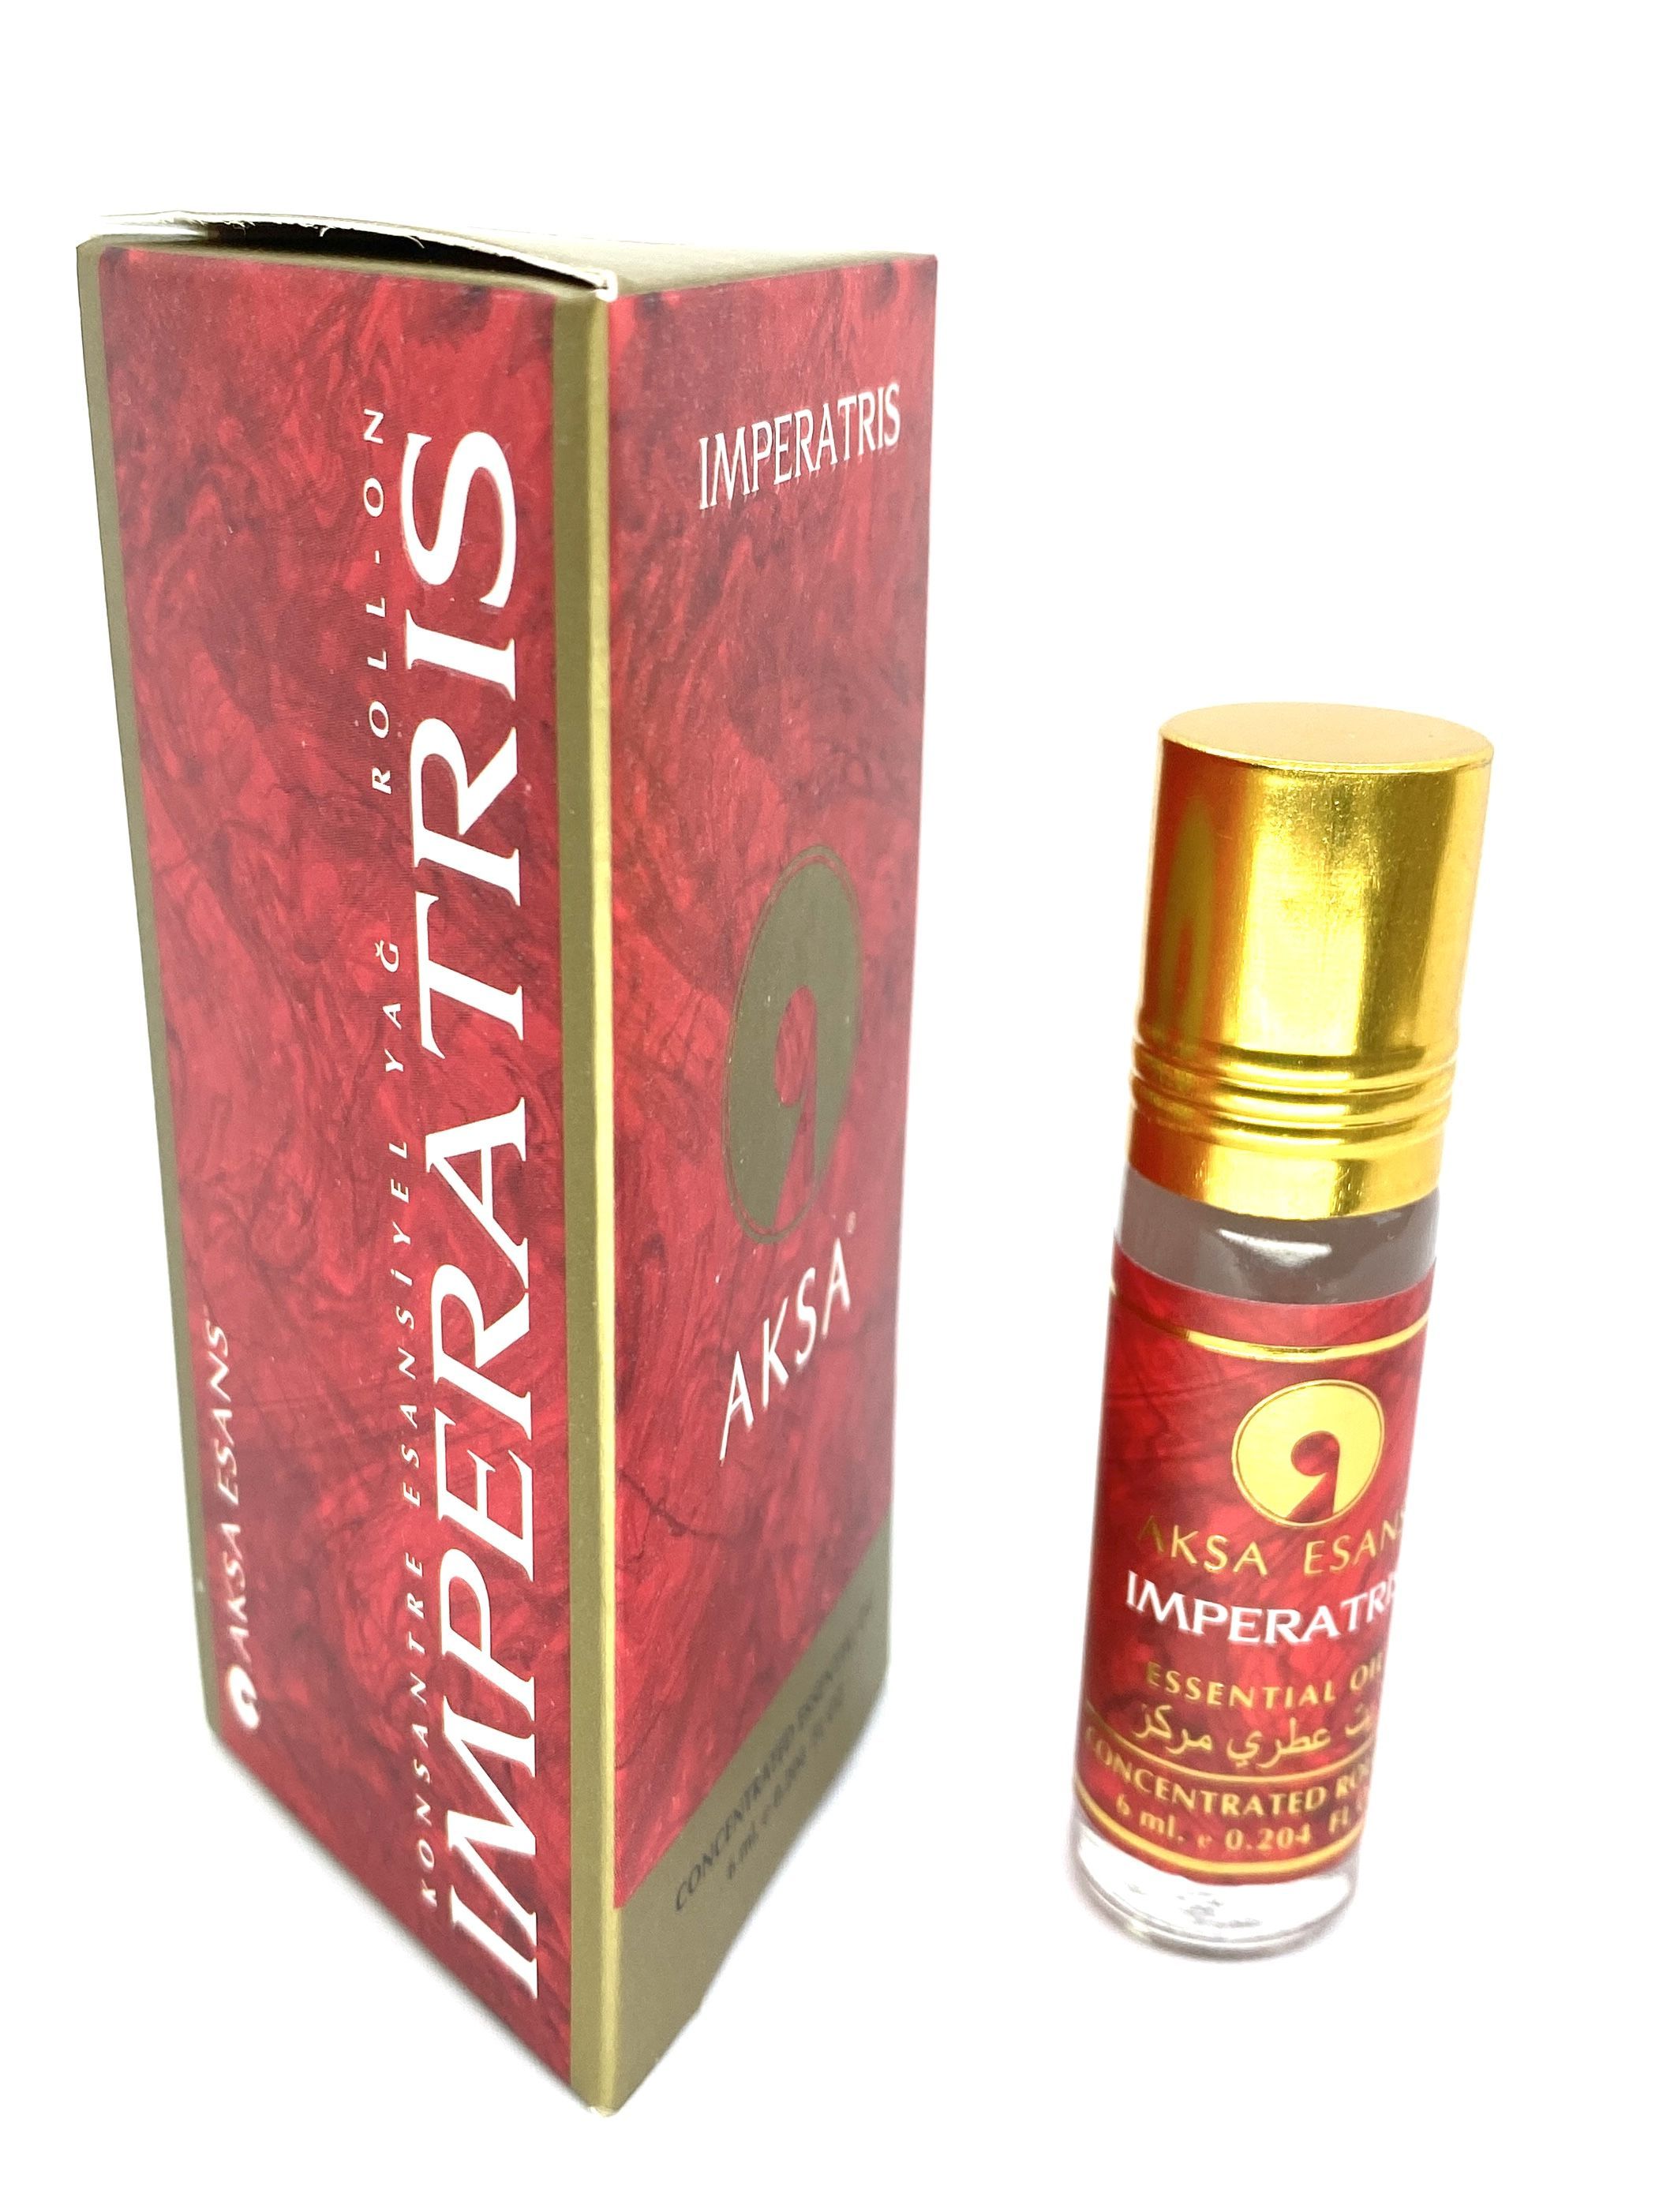 IMPERATRIS Concentrated Perfume Oil, Aksa Esans (ИМПЕРАТРИЦА турецкие роликовые масляные духи, Акса Эсанс), 6 мл.